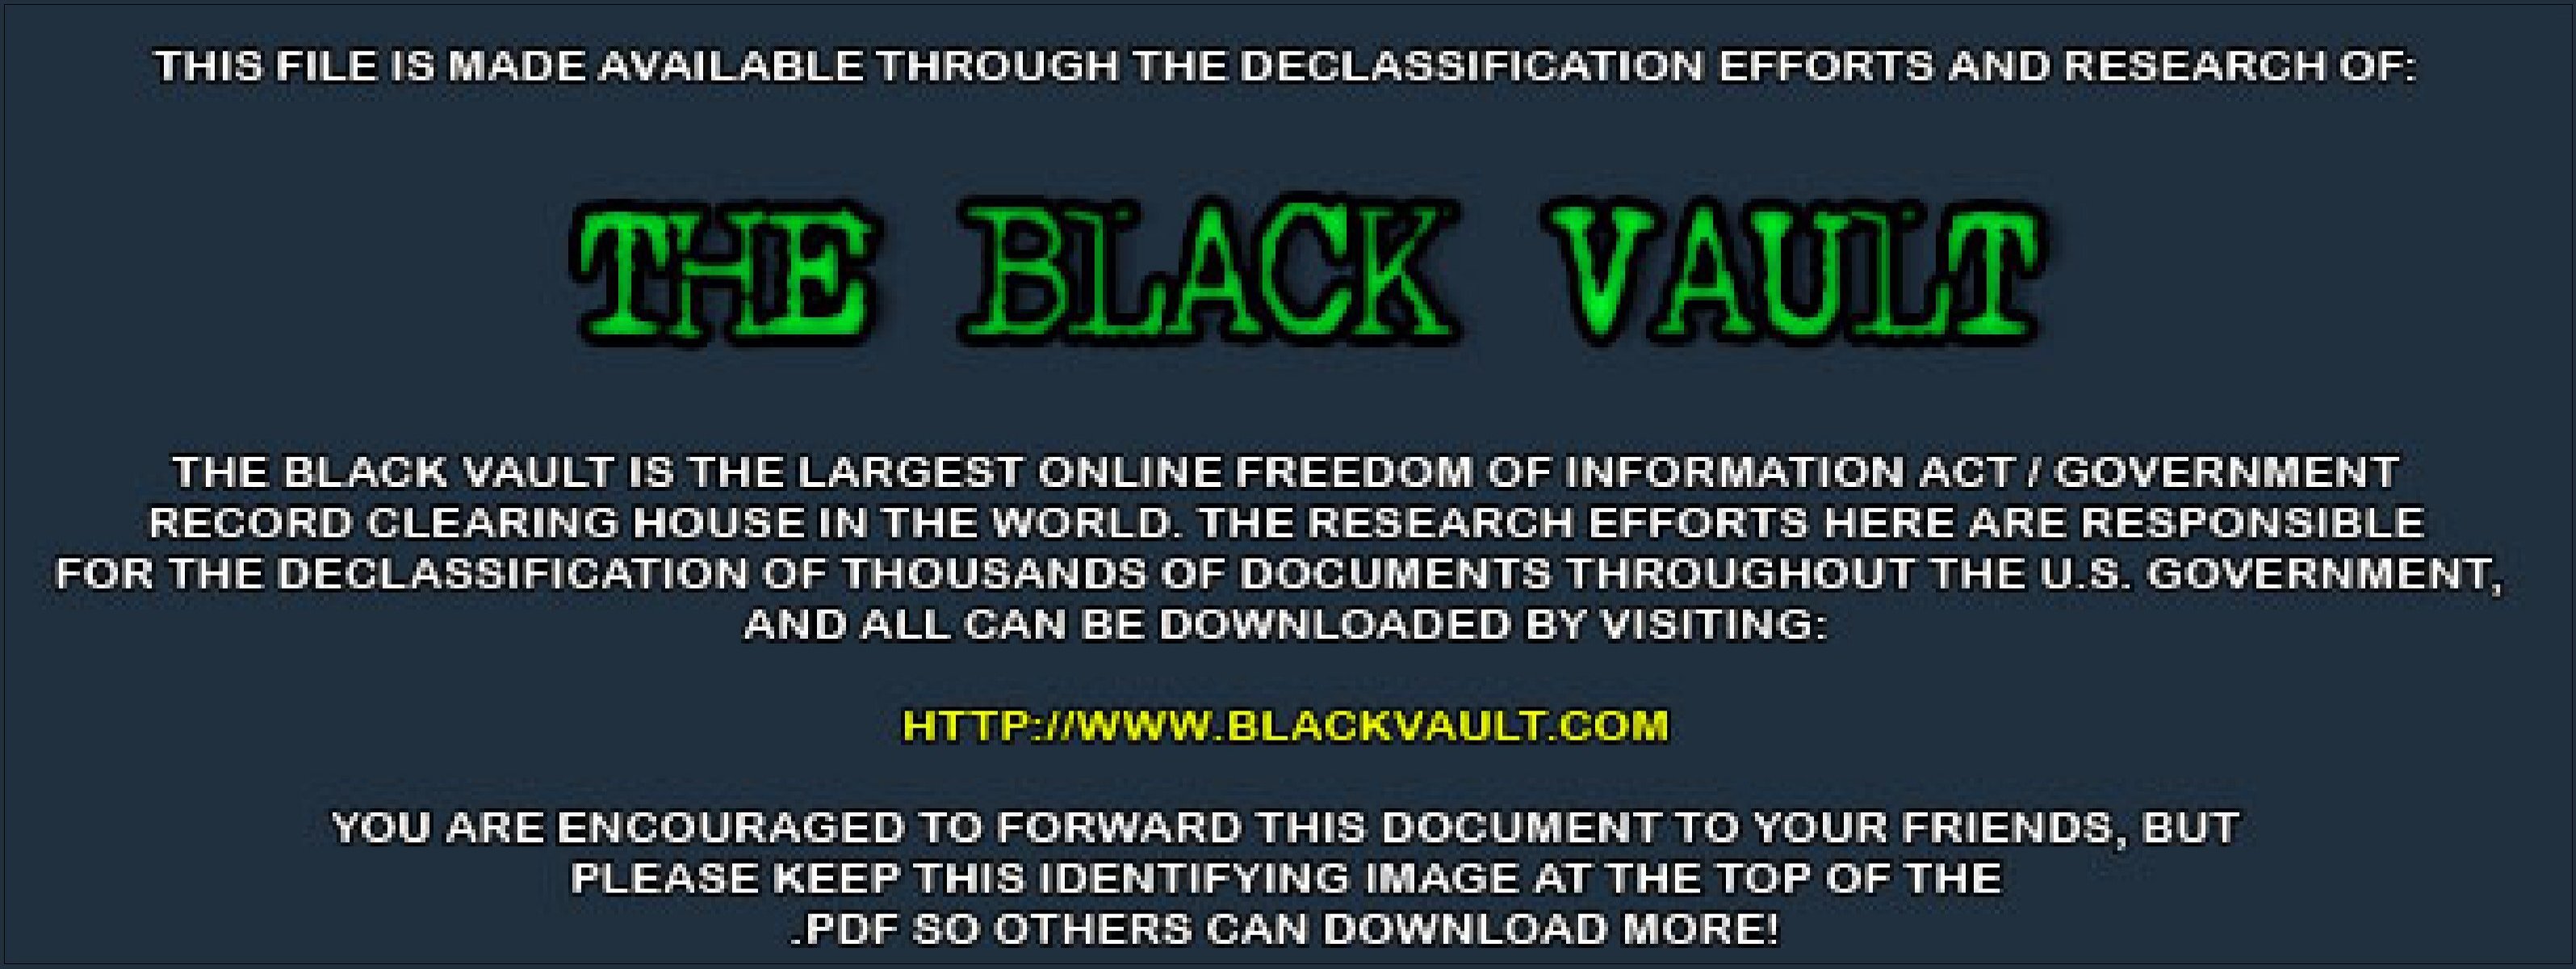 - The Black Vault